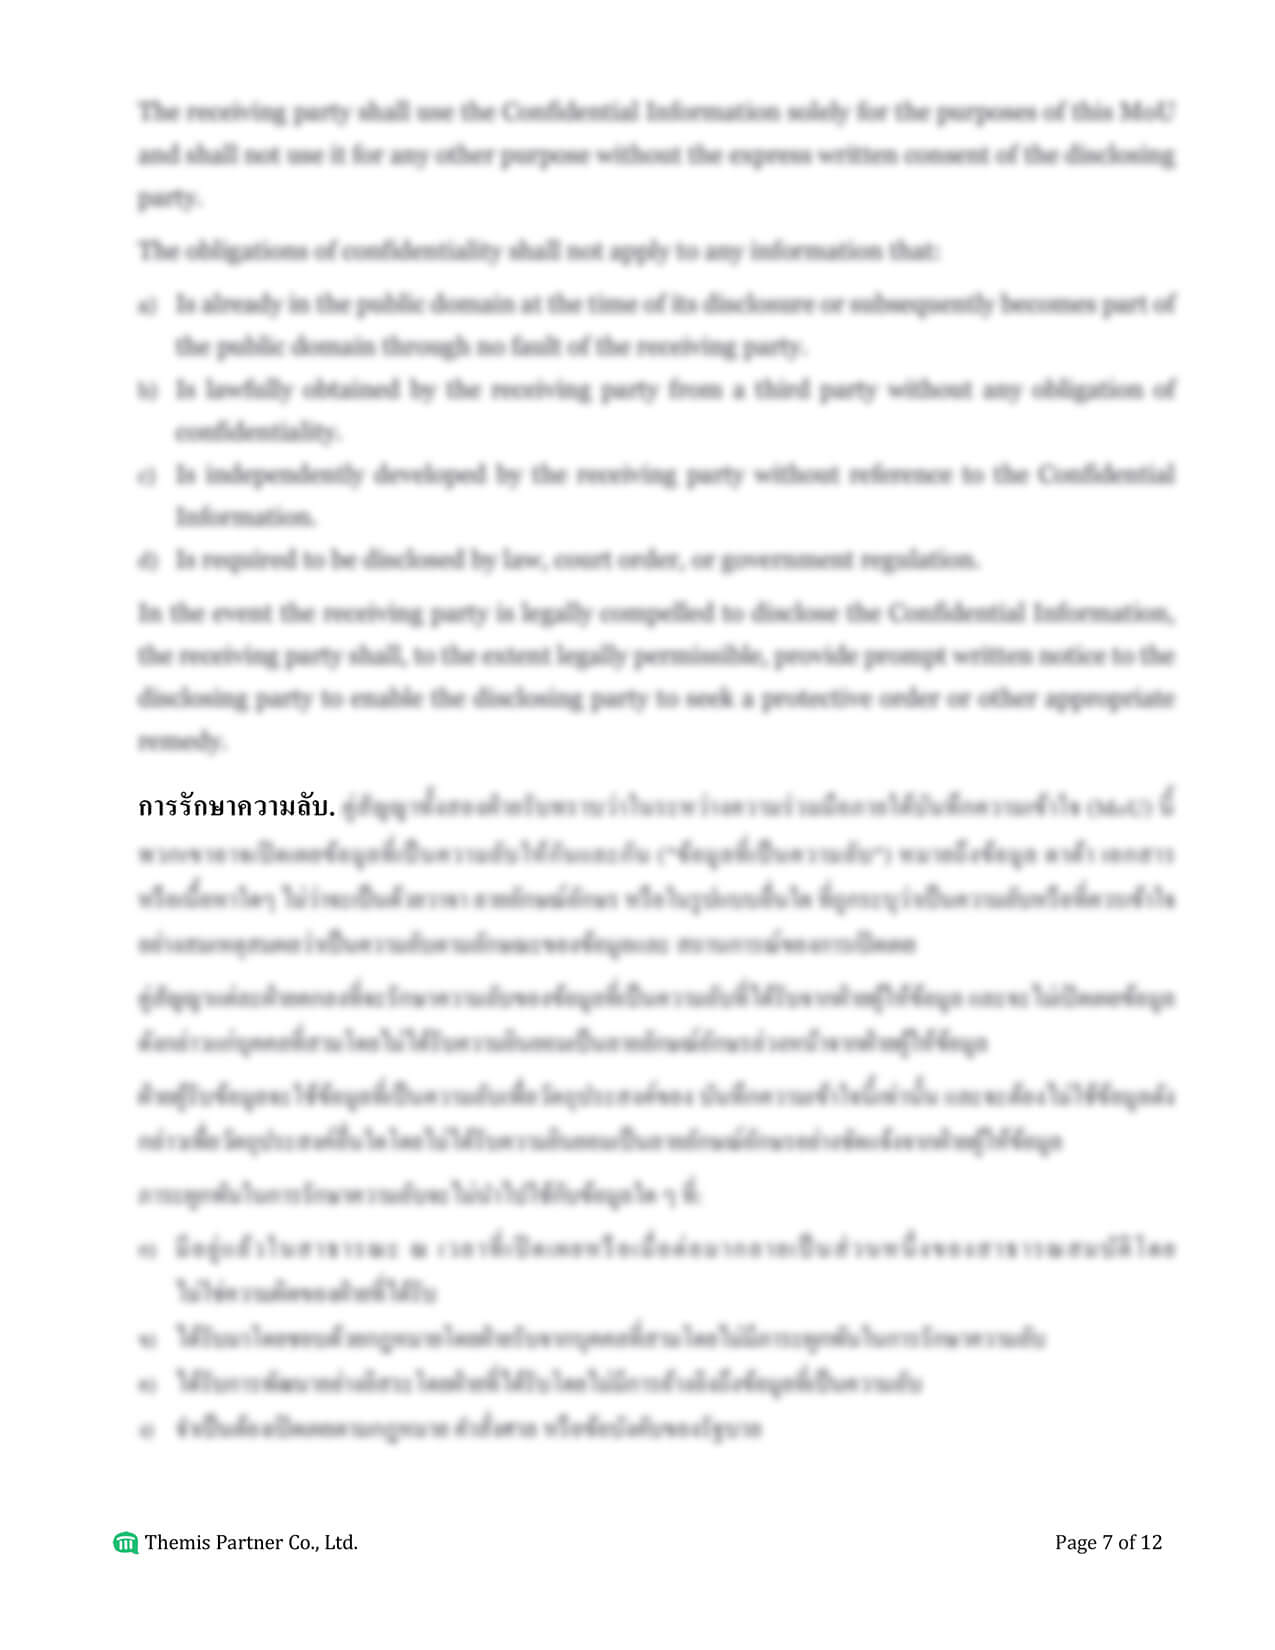 Memorandum of understanding Thailand 7